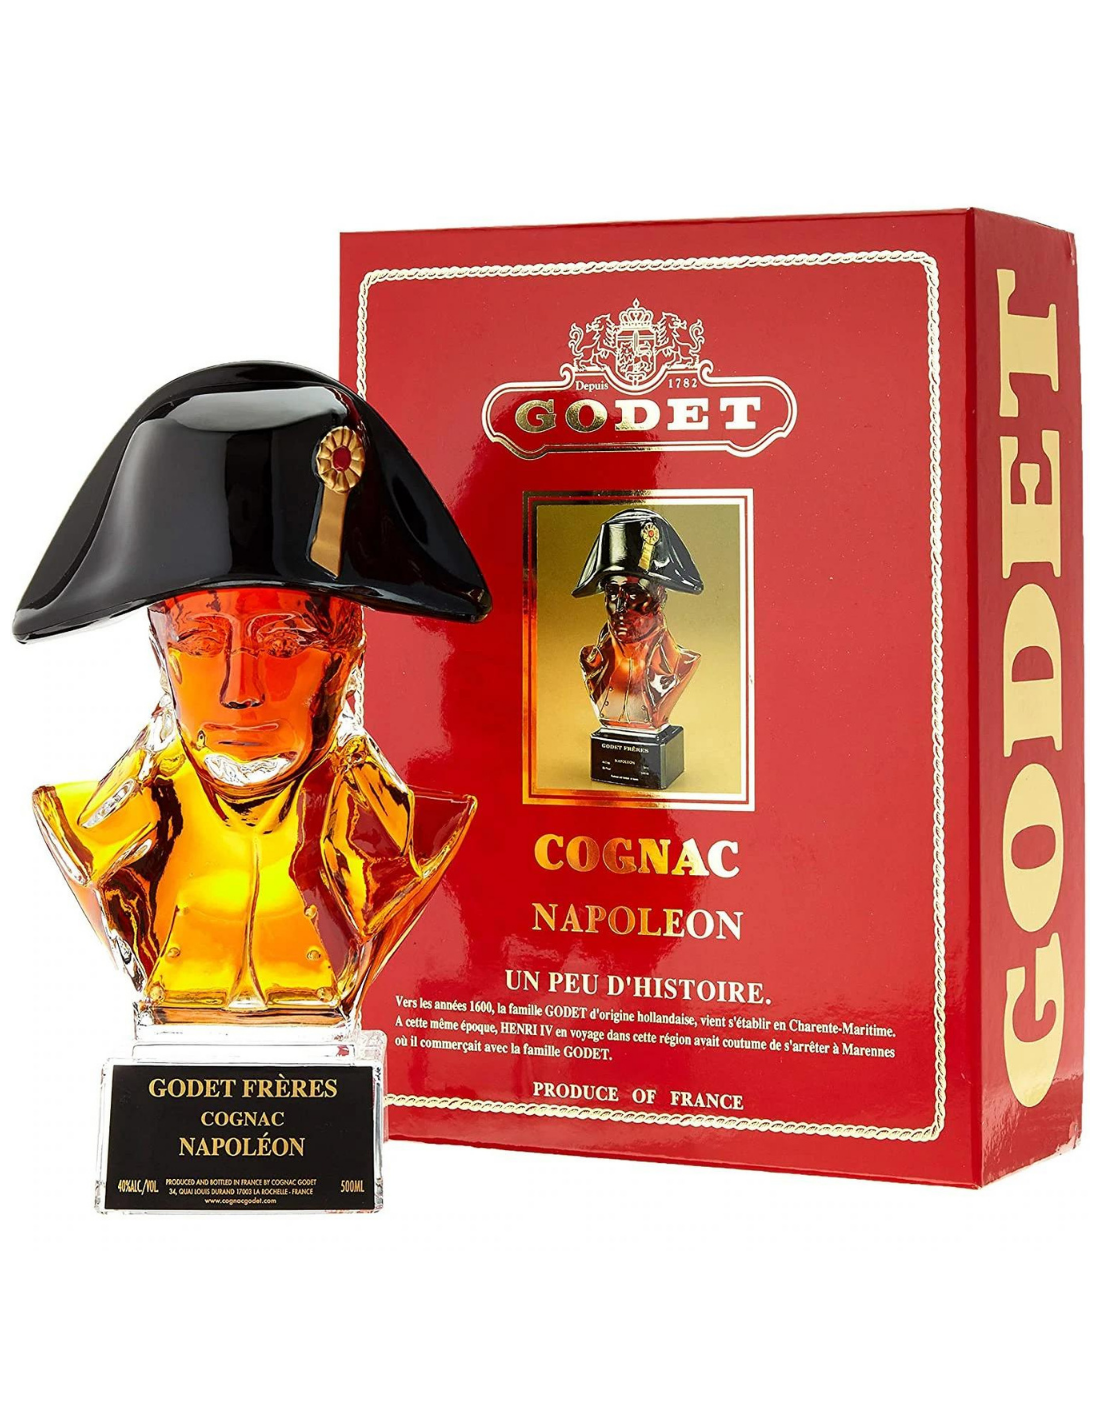 Coniac Godet Freres Napoleon, 40% alc., 0.5L, Franta alcooldiscount.ro